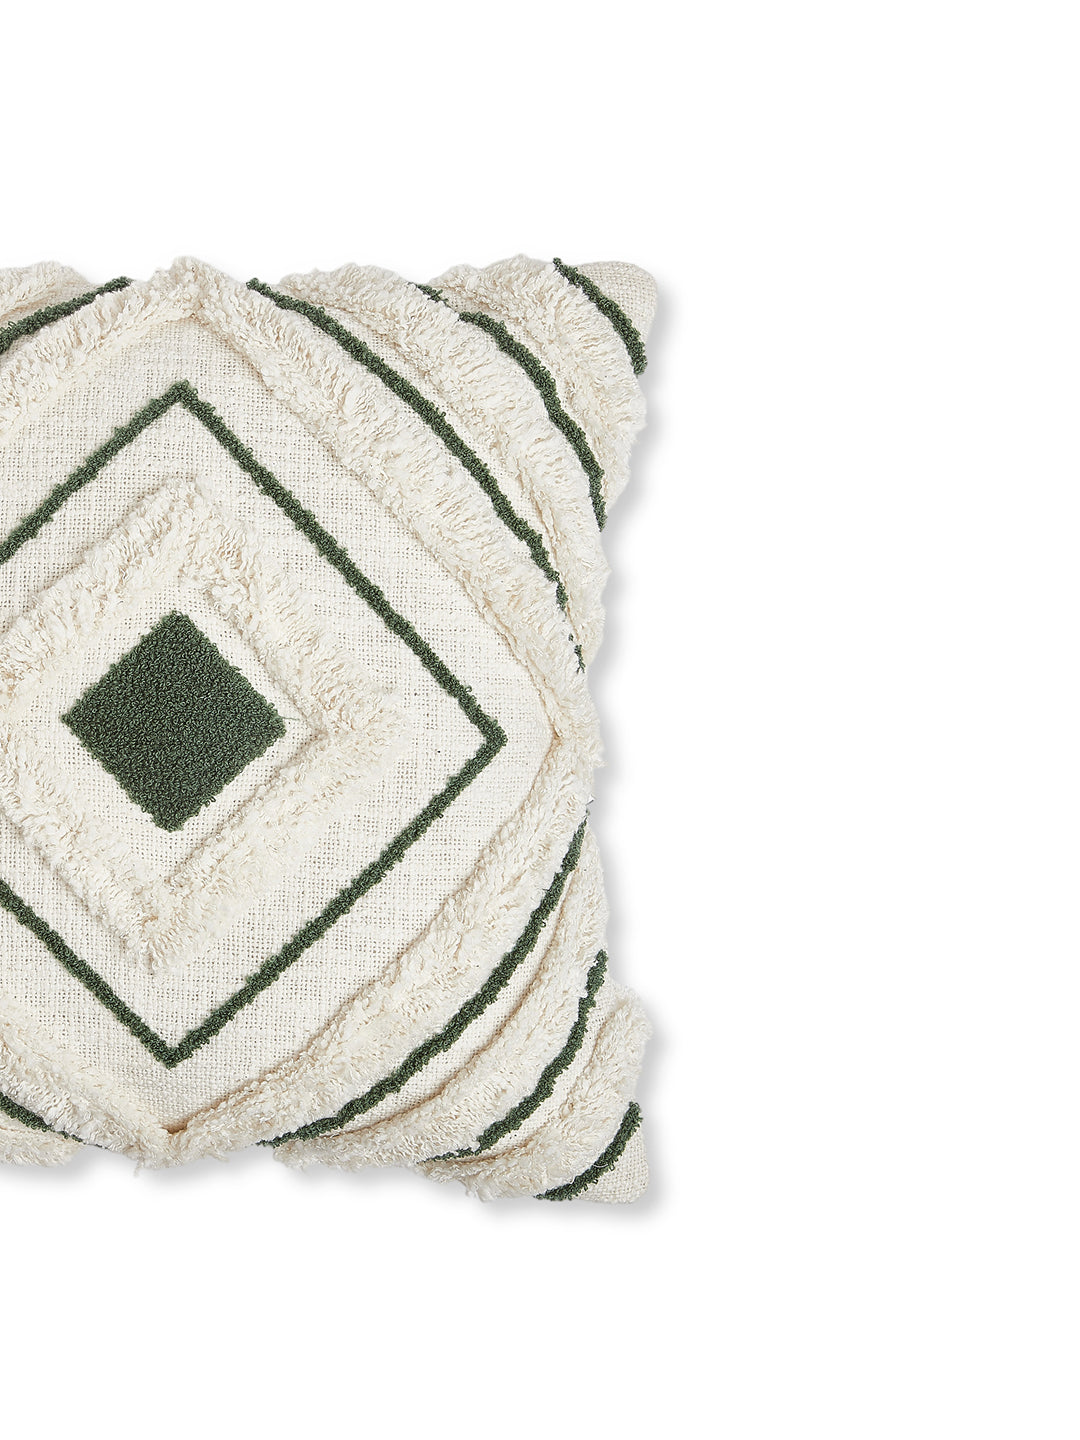 Hemlock Cushion Cover -  Handmade